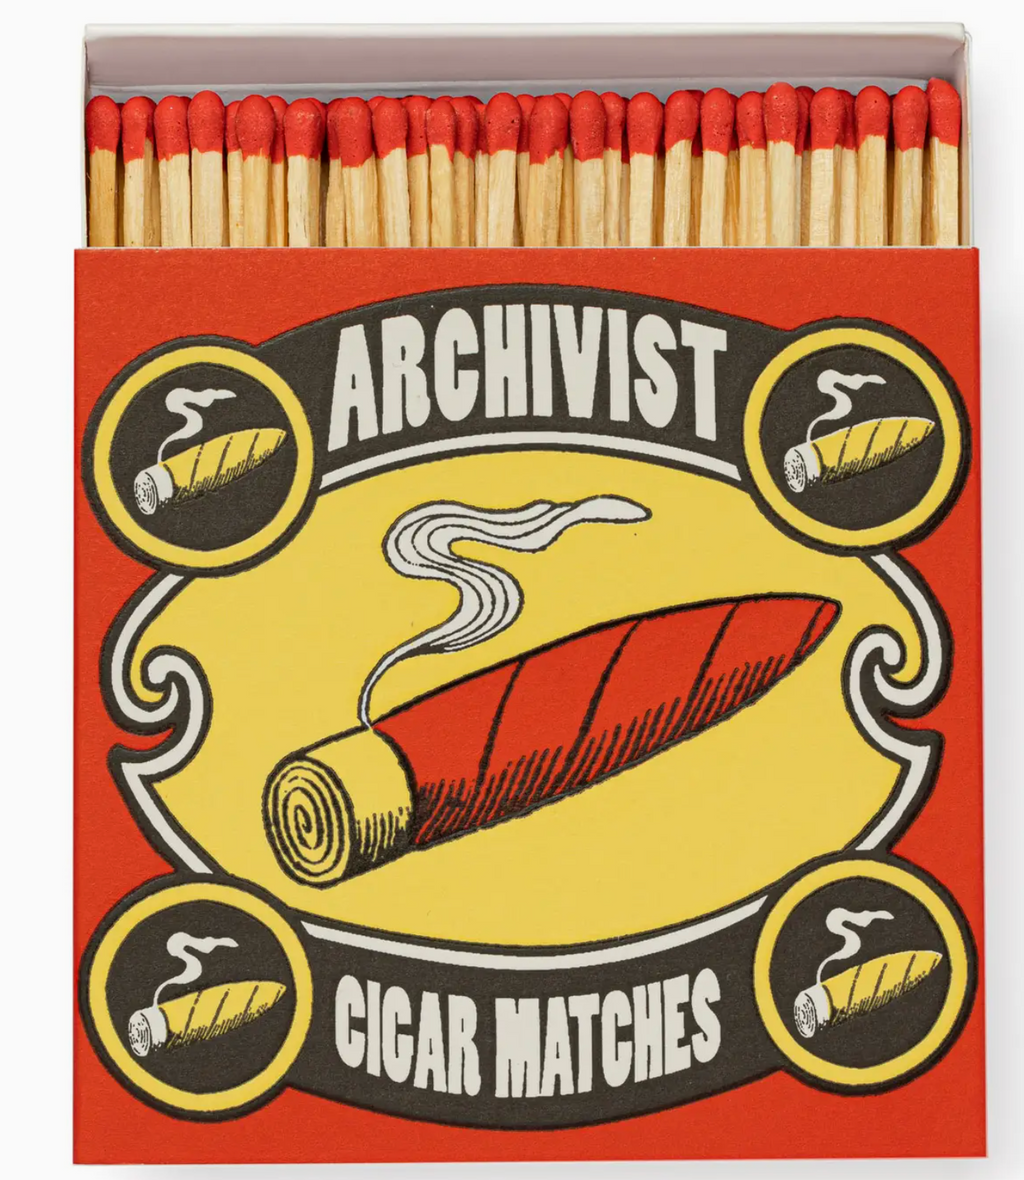 Archivist Gallery Cigar Matches Square Matchbox